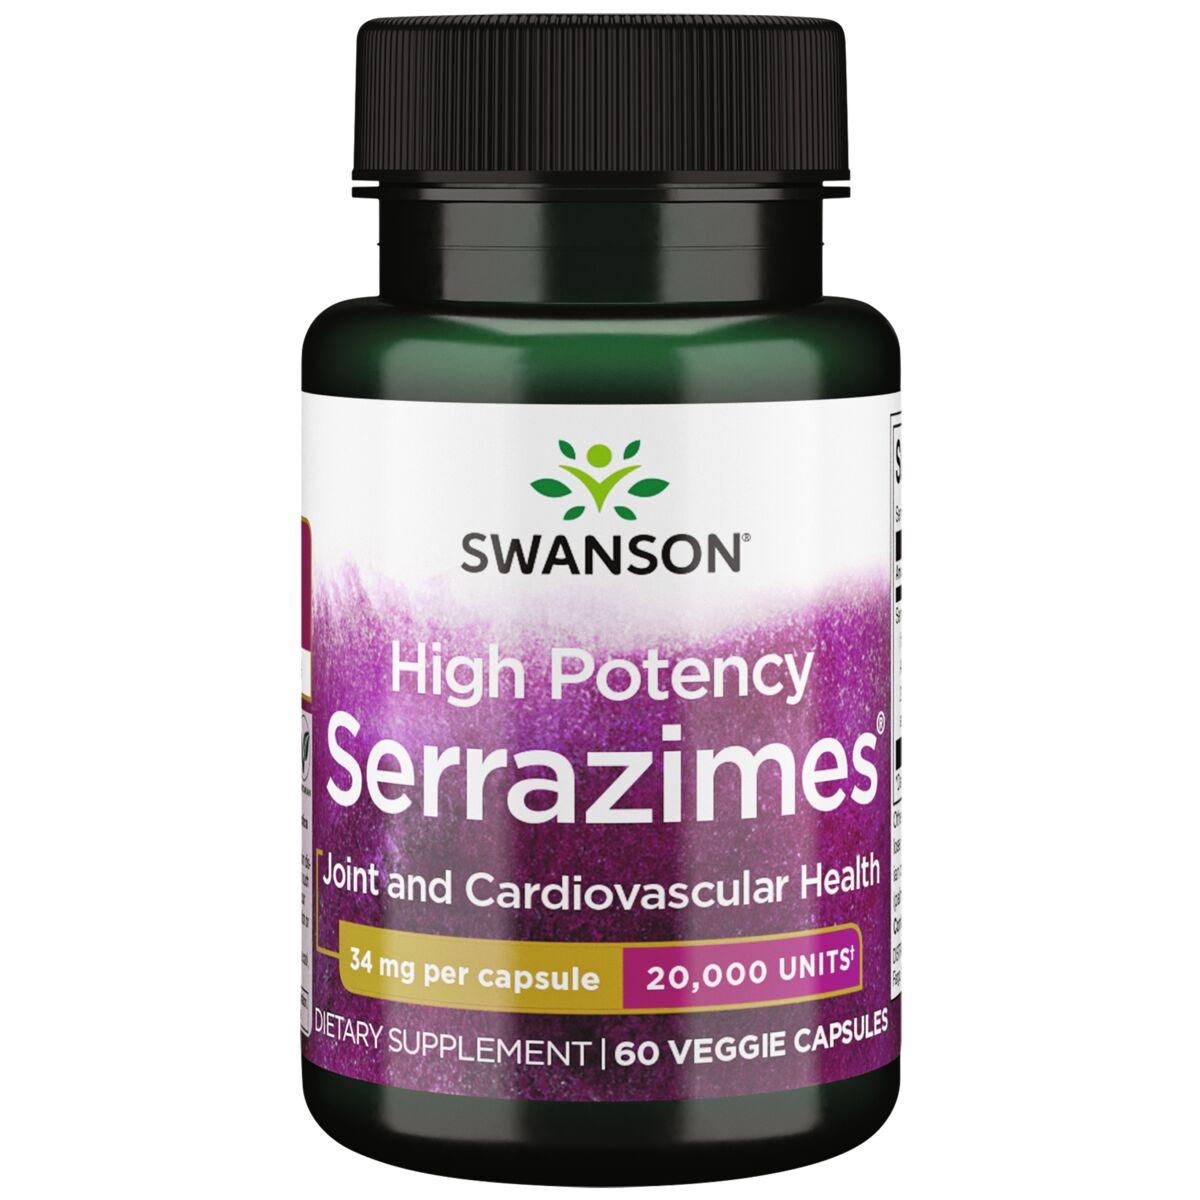 Swanson Ultra High-Potency Serrazimes 20,000 Units Supplement Vitamin | 34 mg | 60 Veg Caps